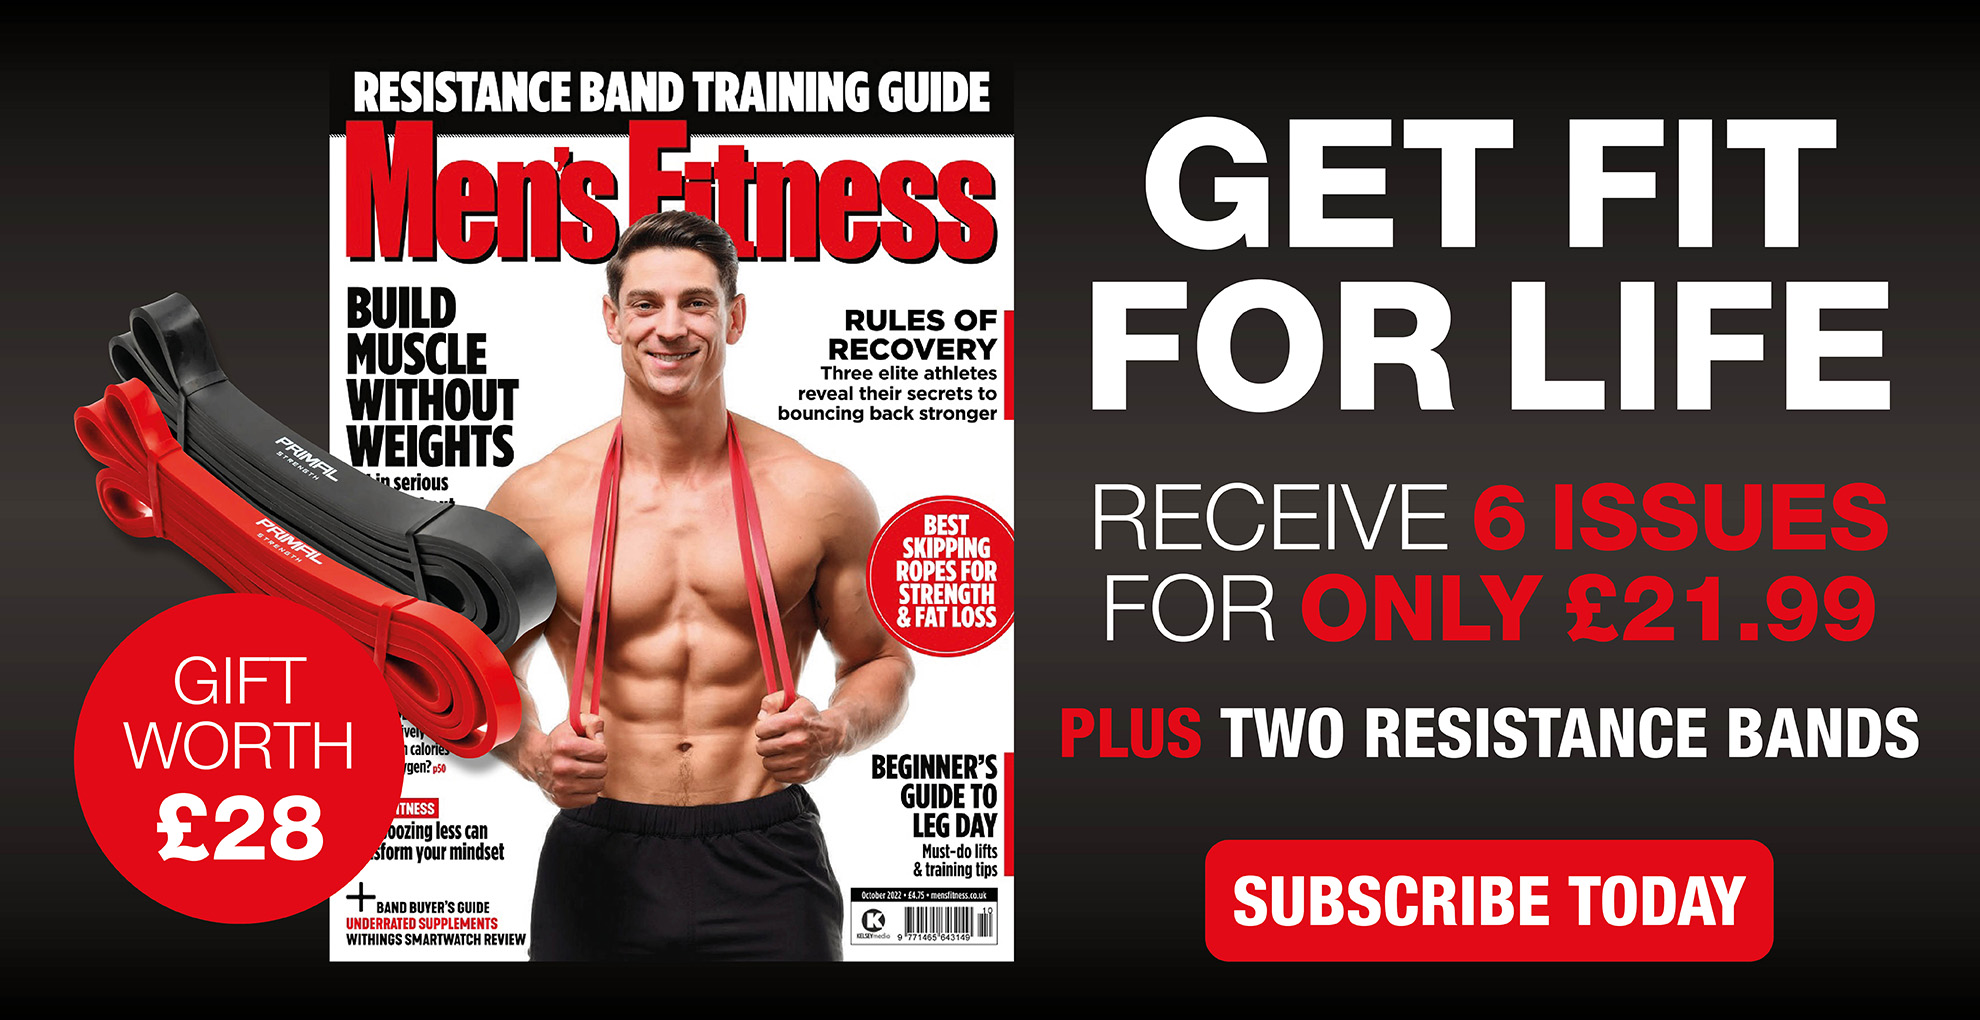 men's fitness subscription offer banner free resistance bands